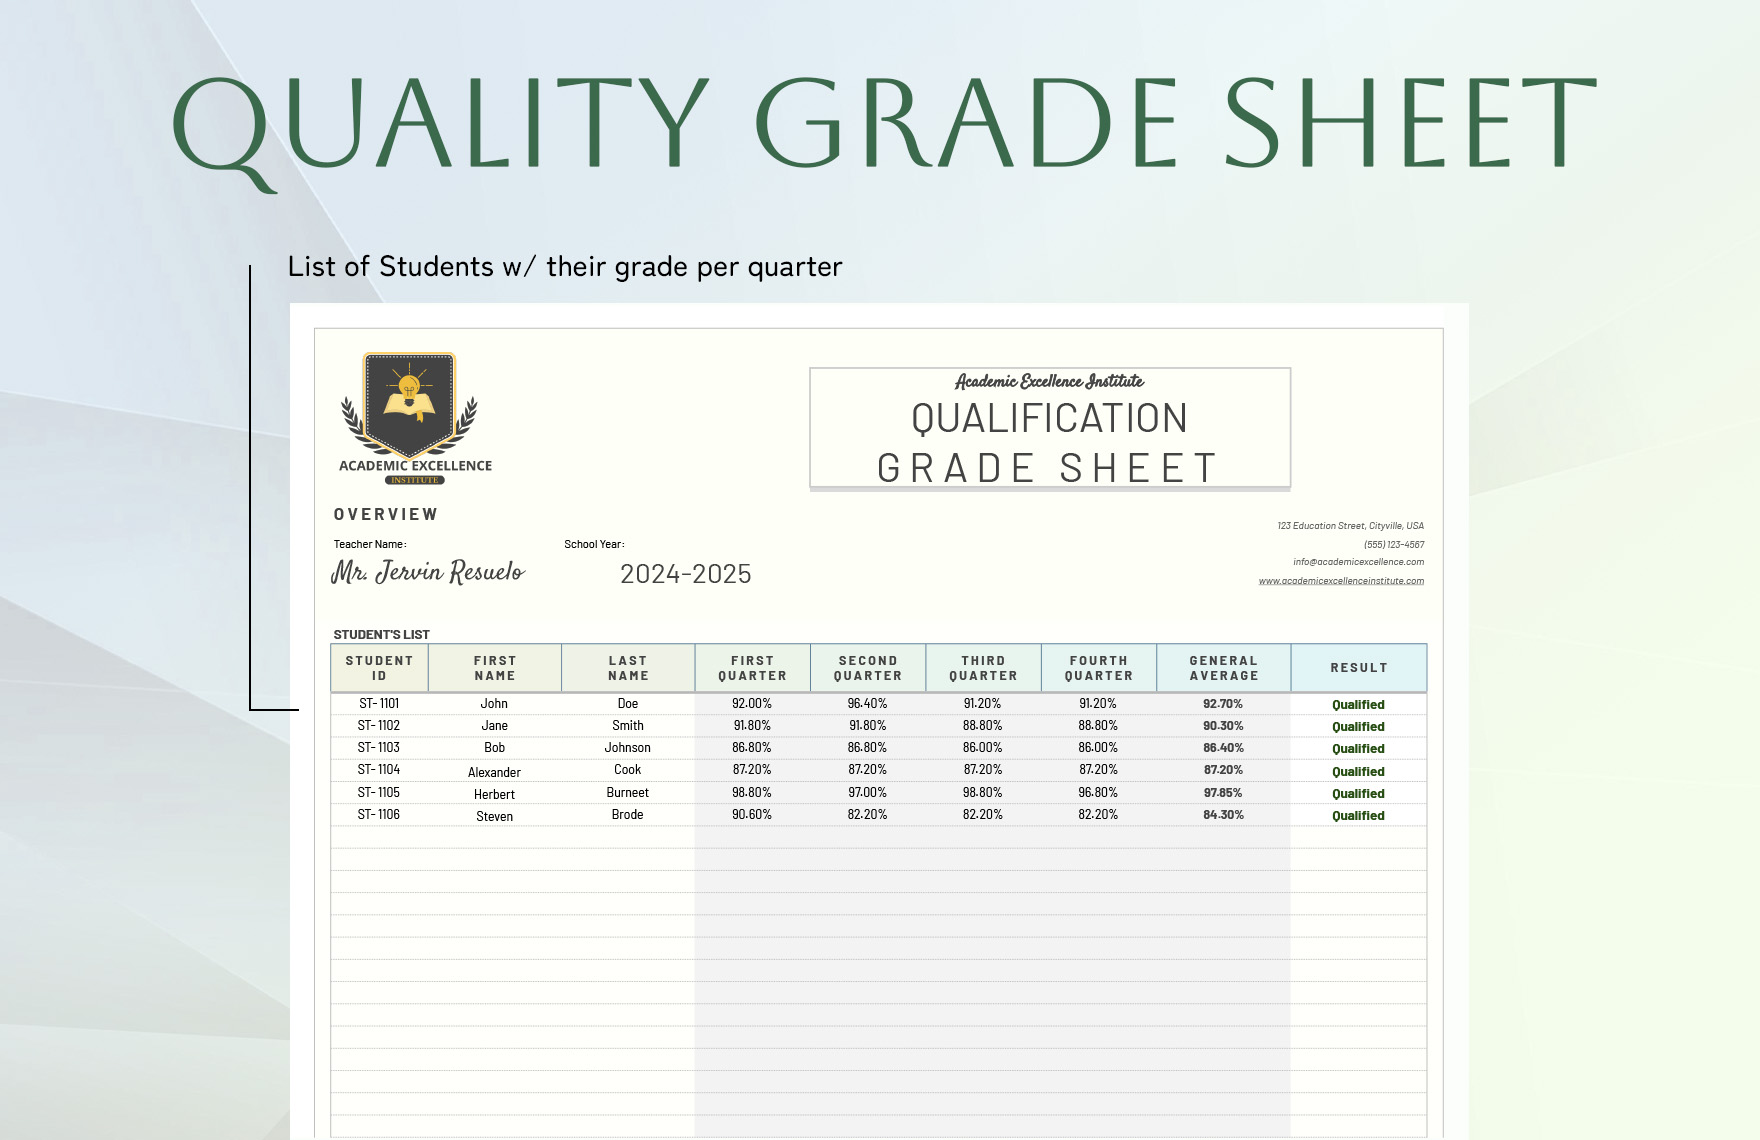 Qualification Grade Sheet Template